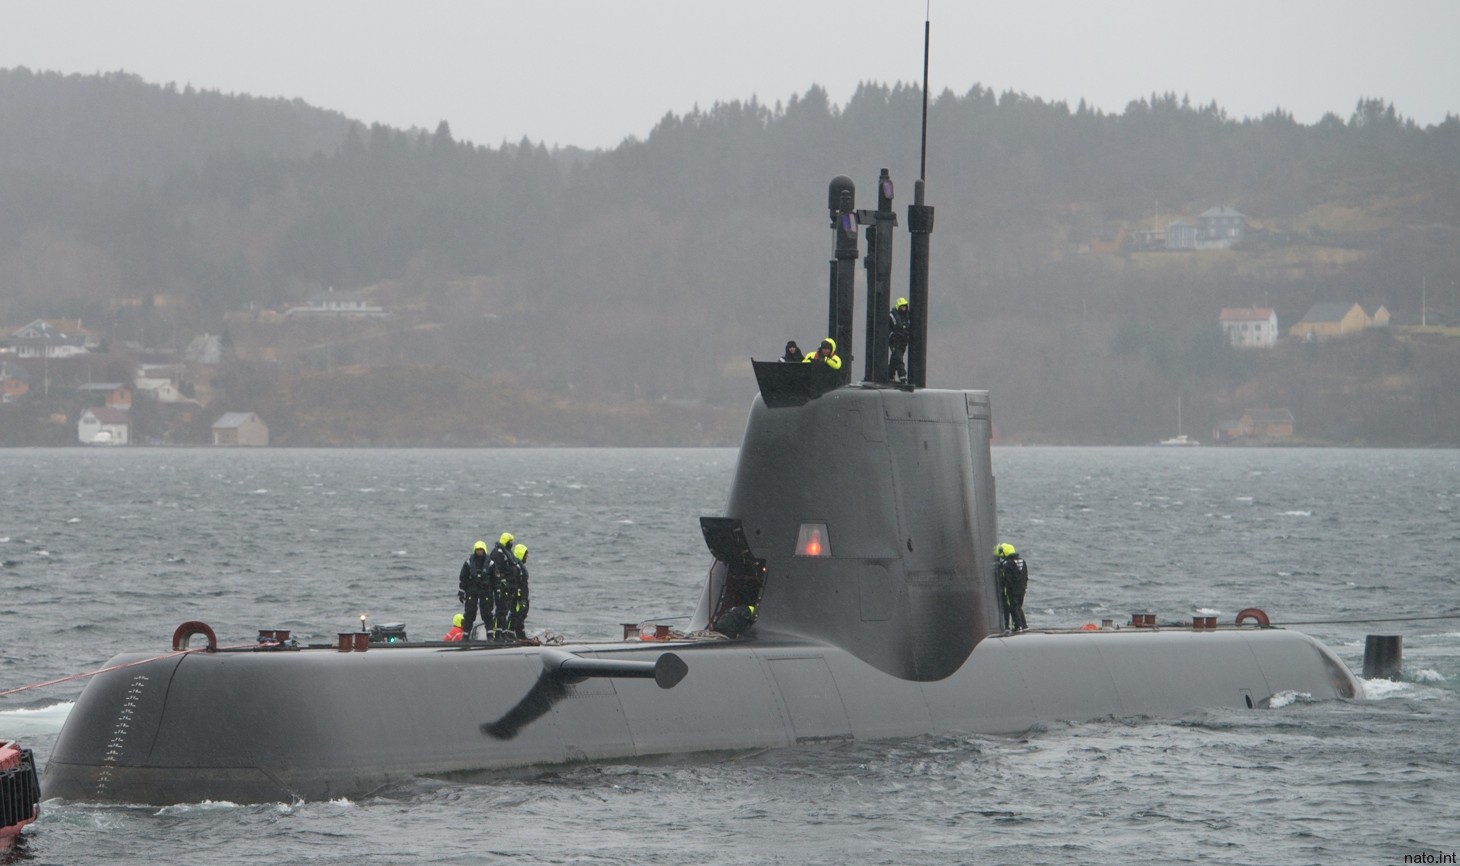 s-160 nrp tridente class type 209pn attack submarine ssk aip portuguese navy marinha nato 22